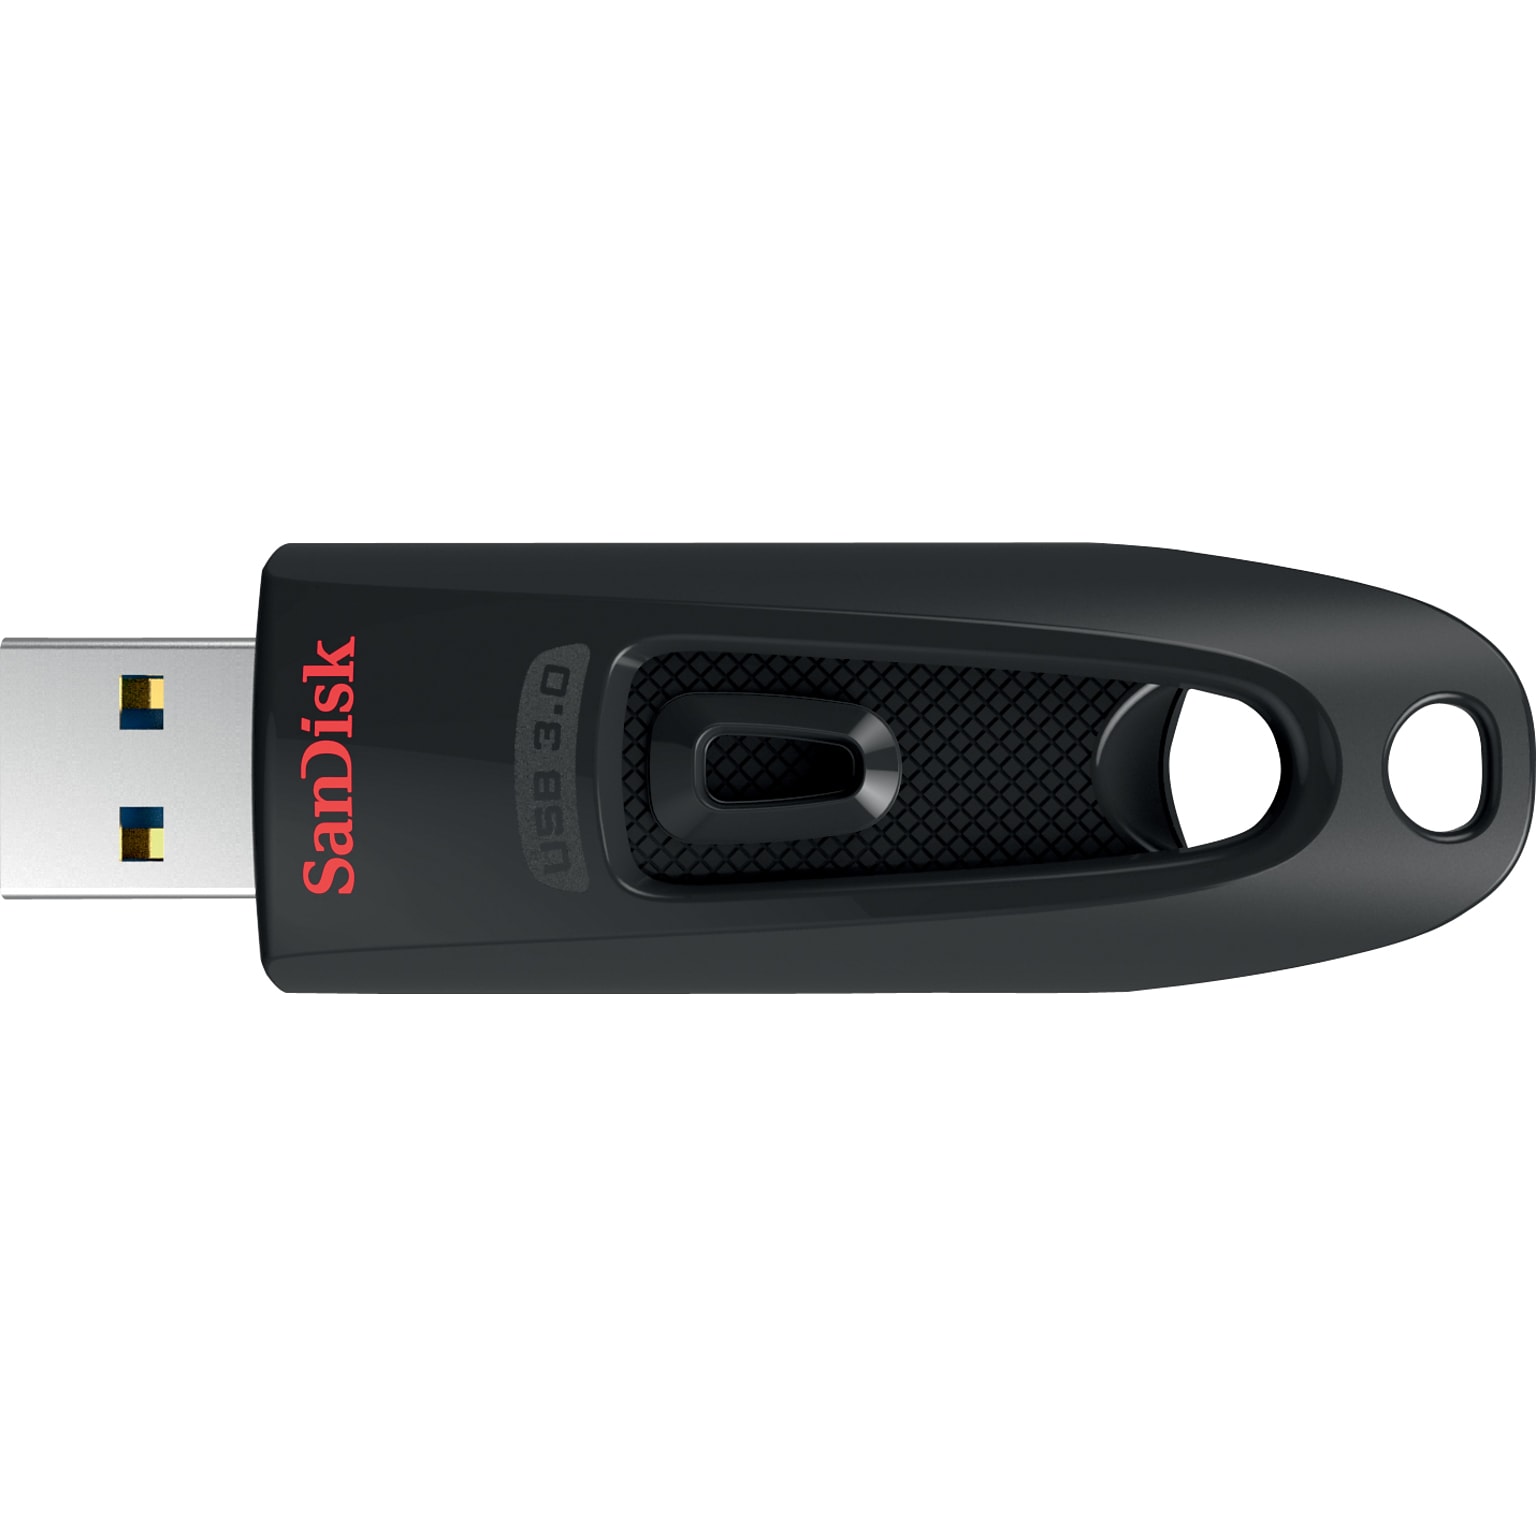 SanDisk Ultra 256GB USB 3.0 Type A Flash Drive, Black (SDCZ48-256G-A46)